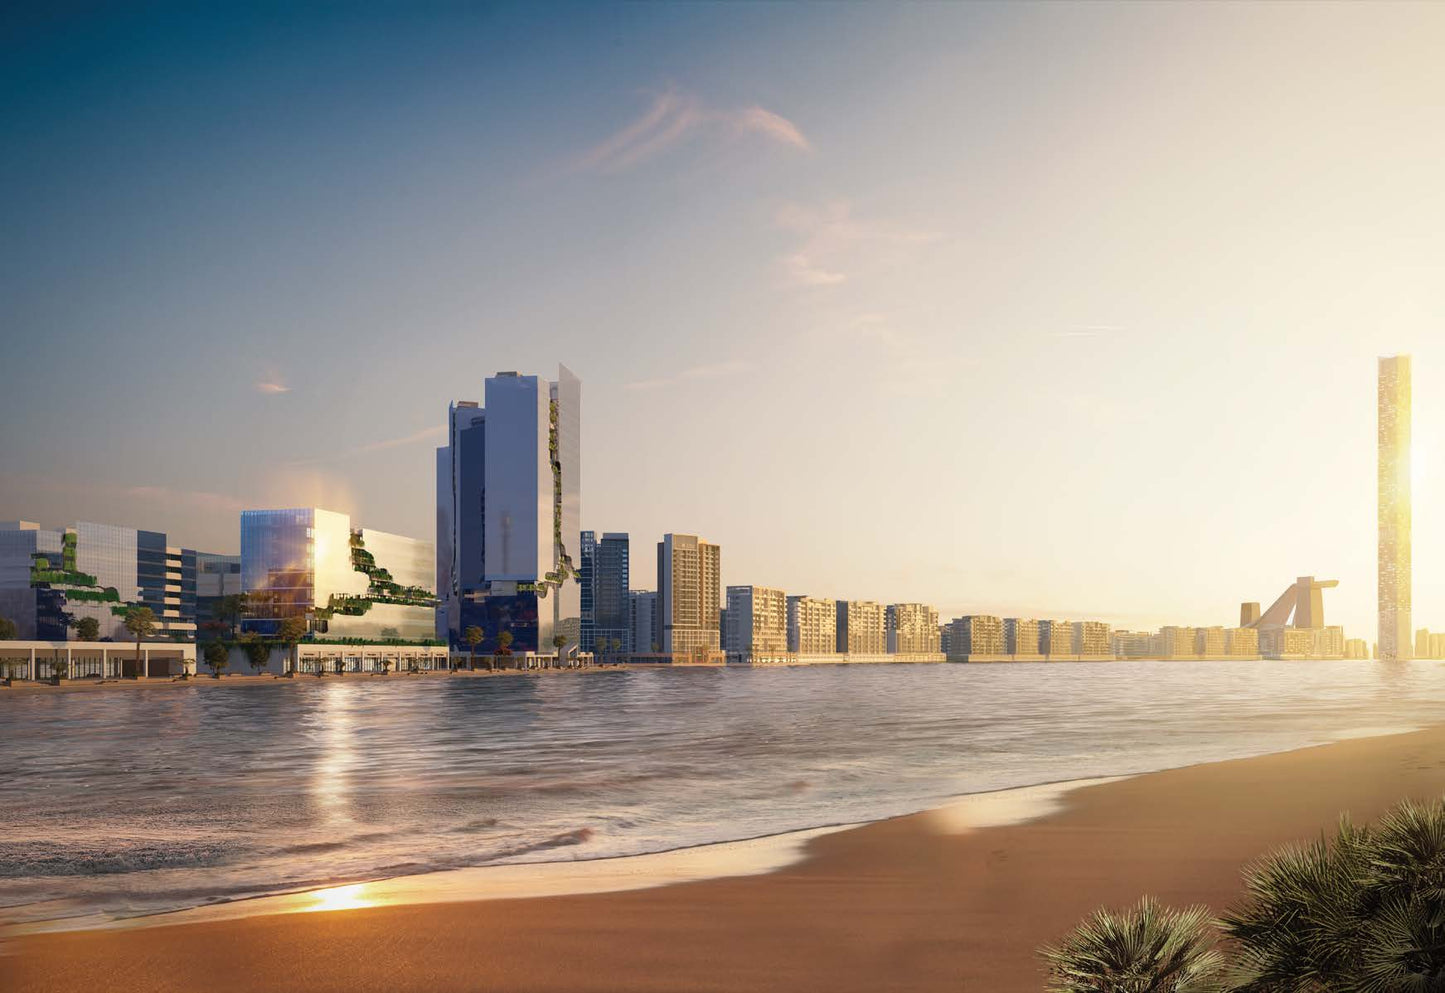 Riviera Beachfront - Meydan One